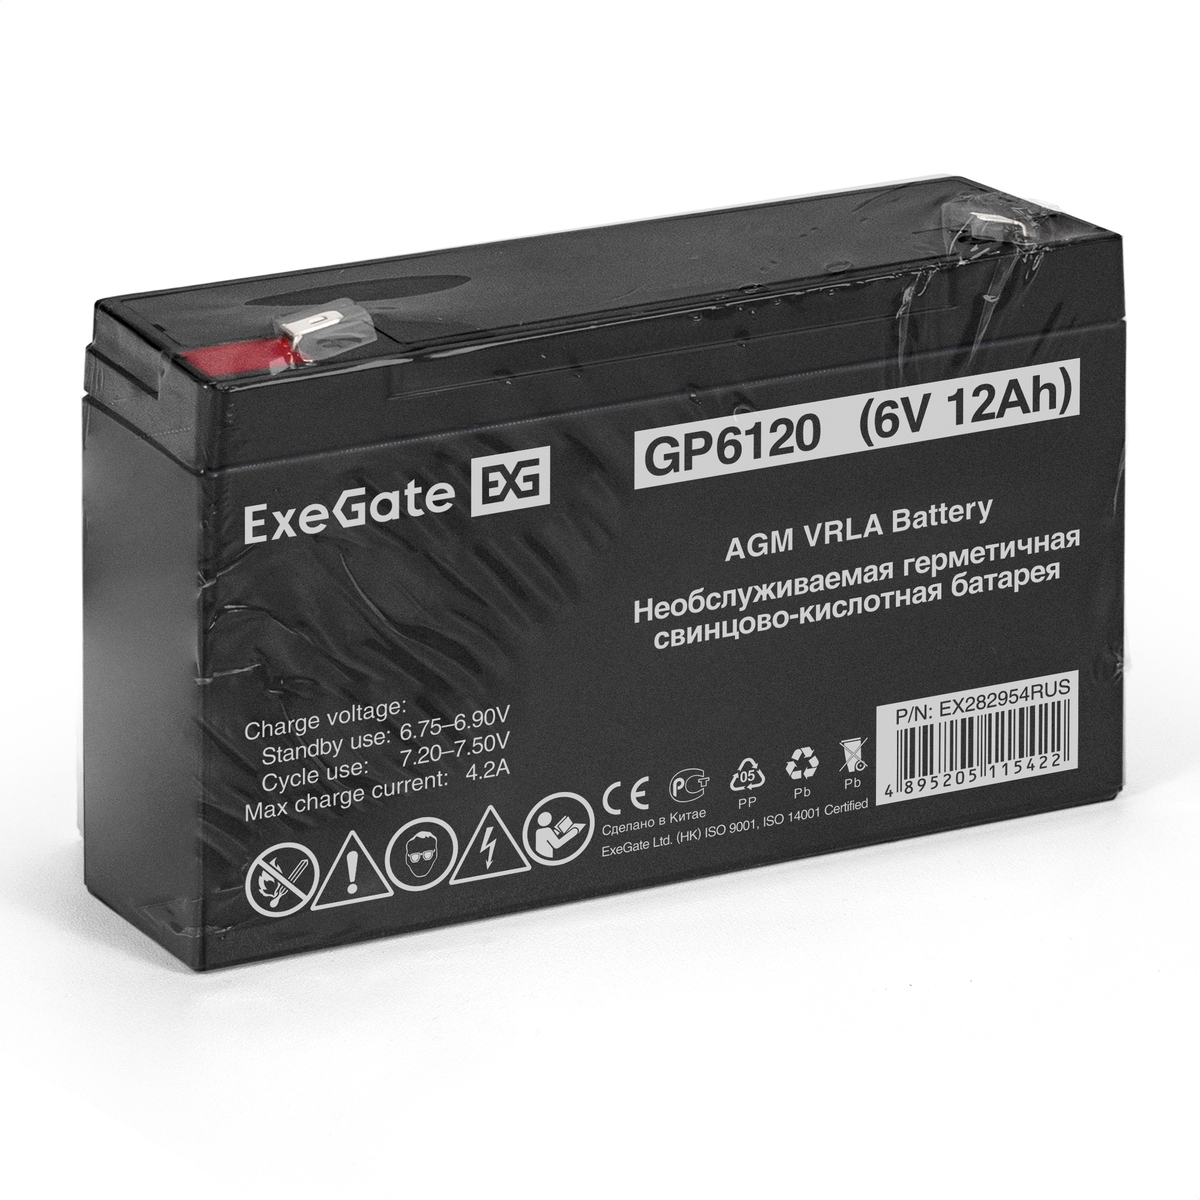  ExeGate GP6120